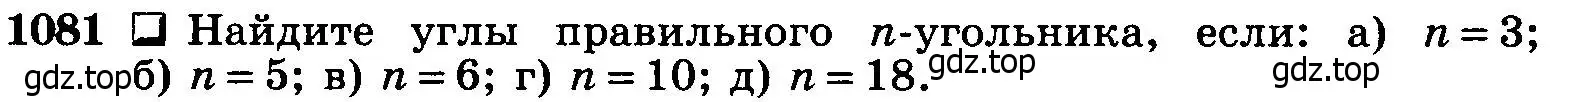 Условие номер 1081 (страница 276) гдз по геометрии 7-9 класс Атанасян, Бутузов, учебник